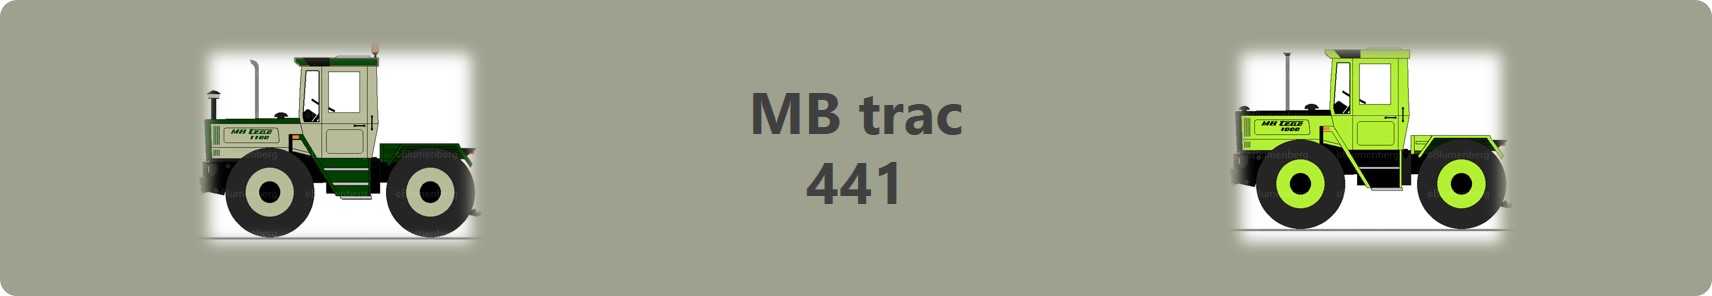 MBtrac441.jpg